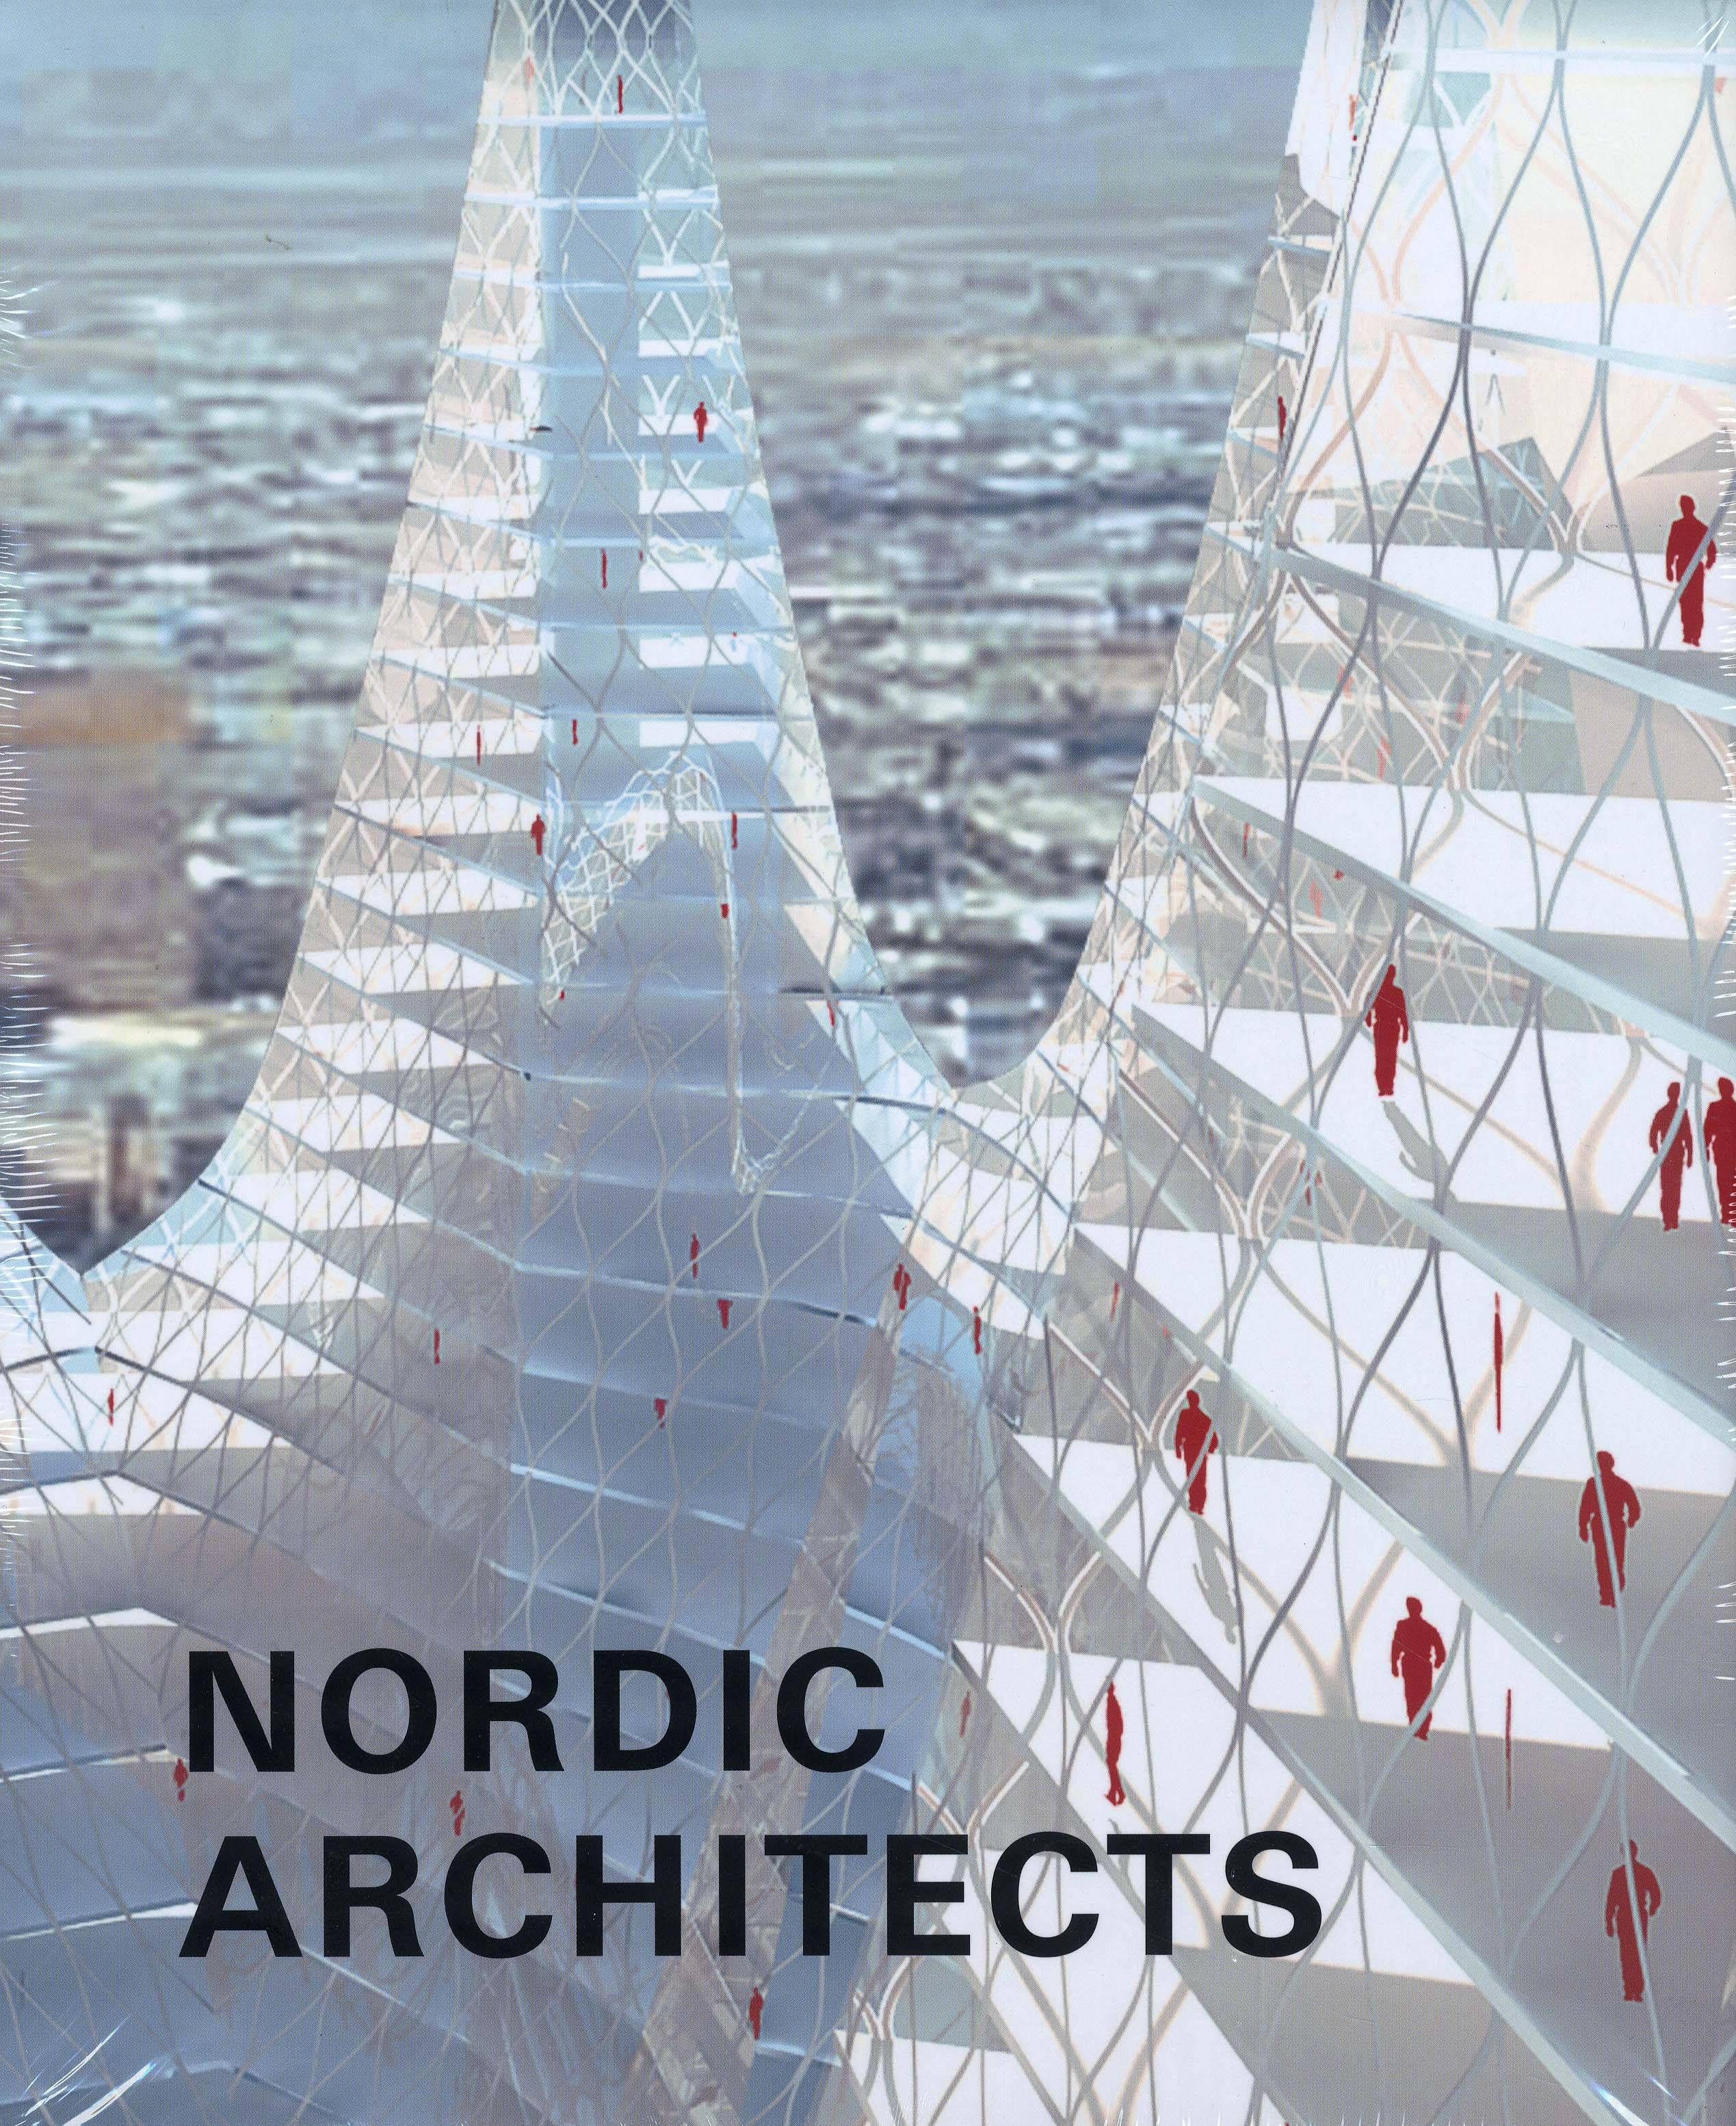 Nordic architects